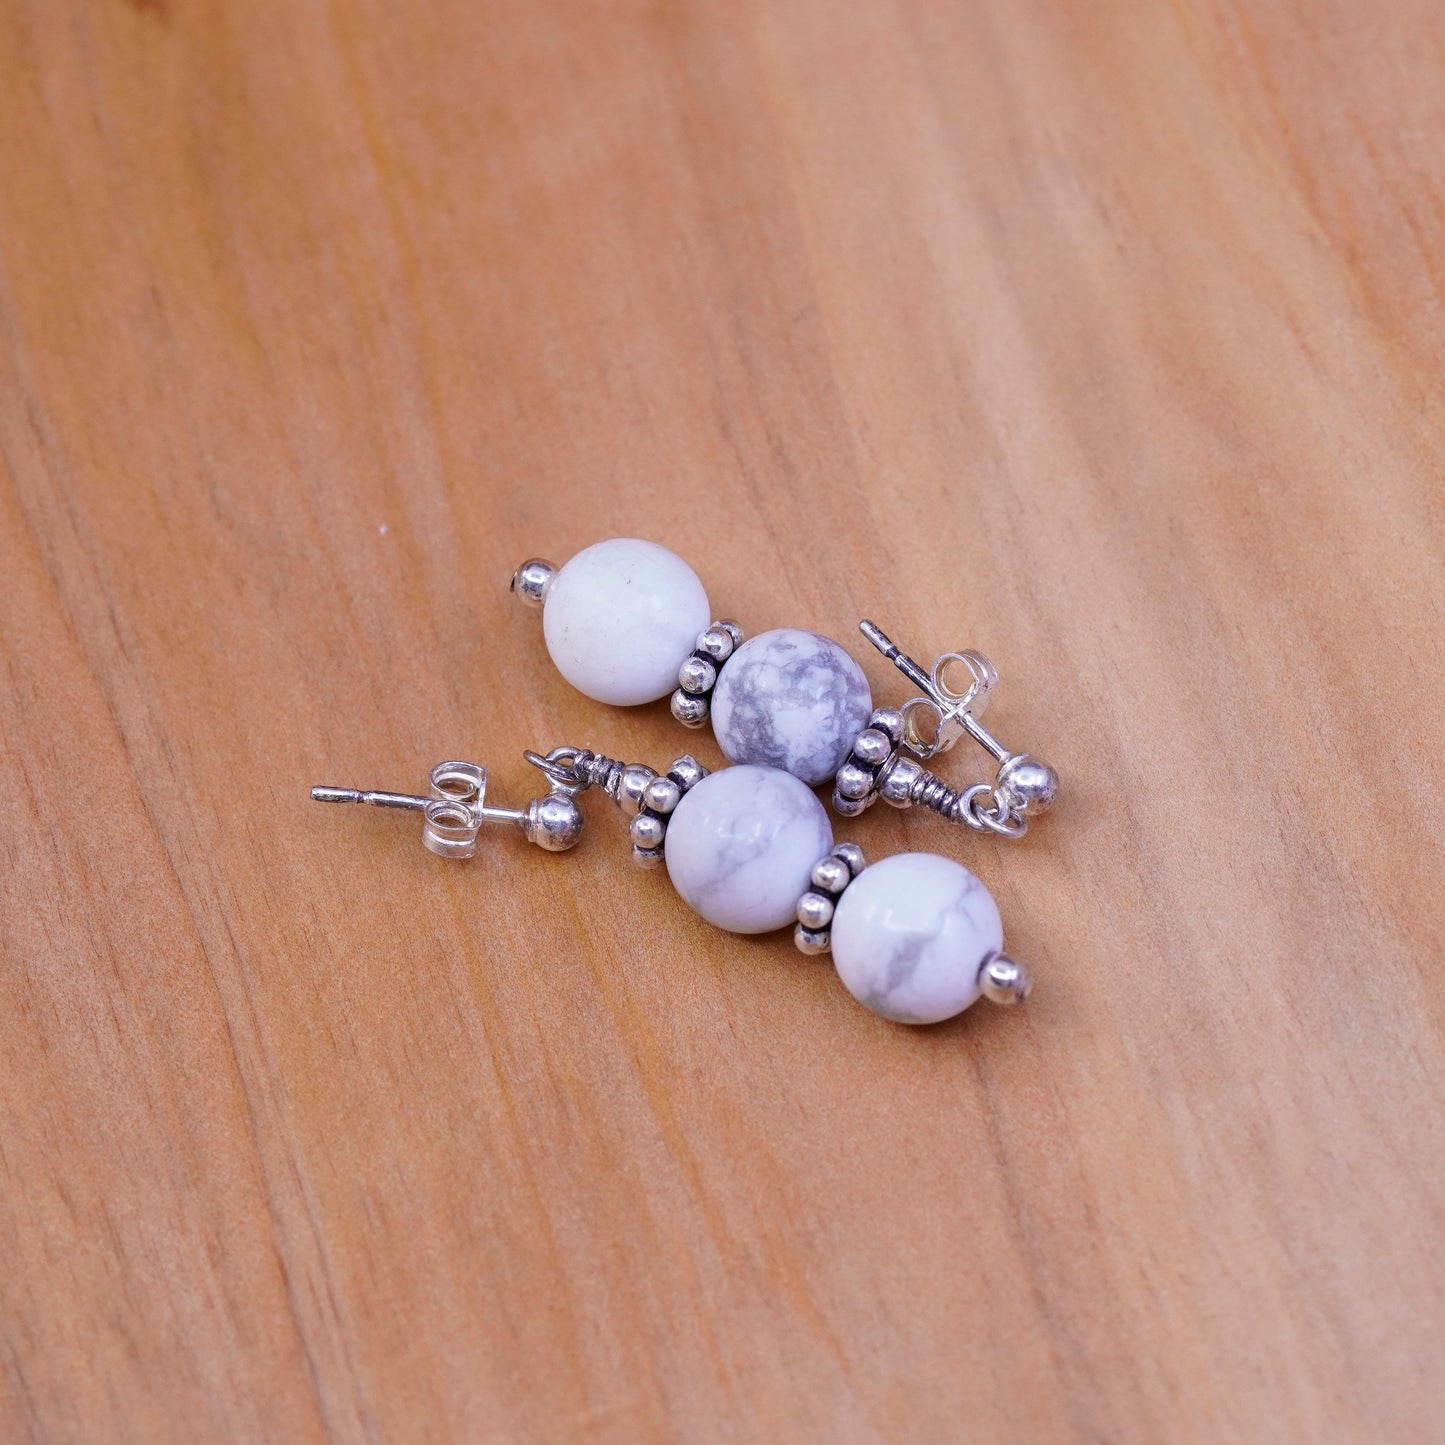 Vintage Sterling 925 silver handmade earrings with howlite beads